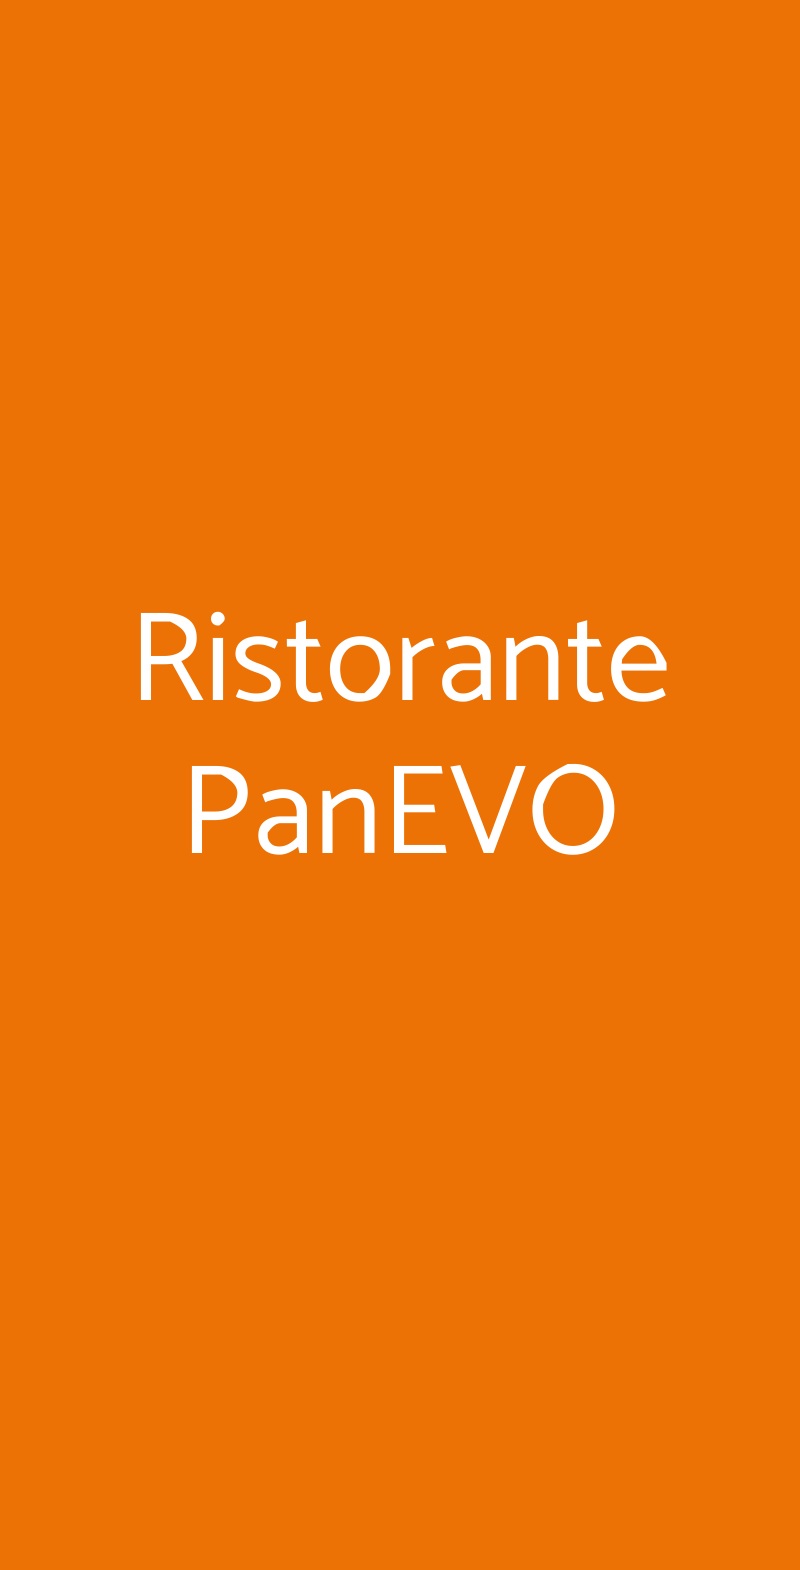 Ristorante PanEVO Milano menù 1 pagina